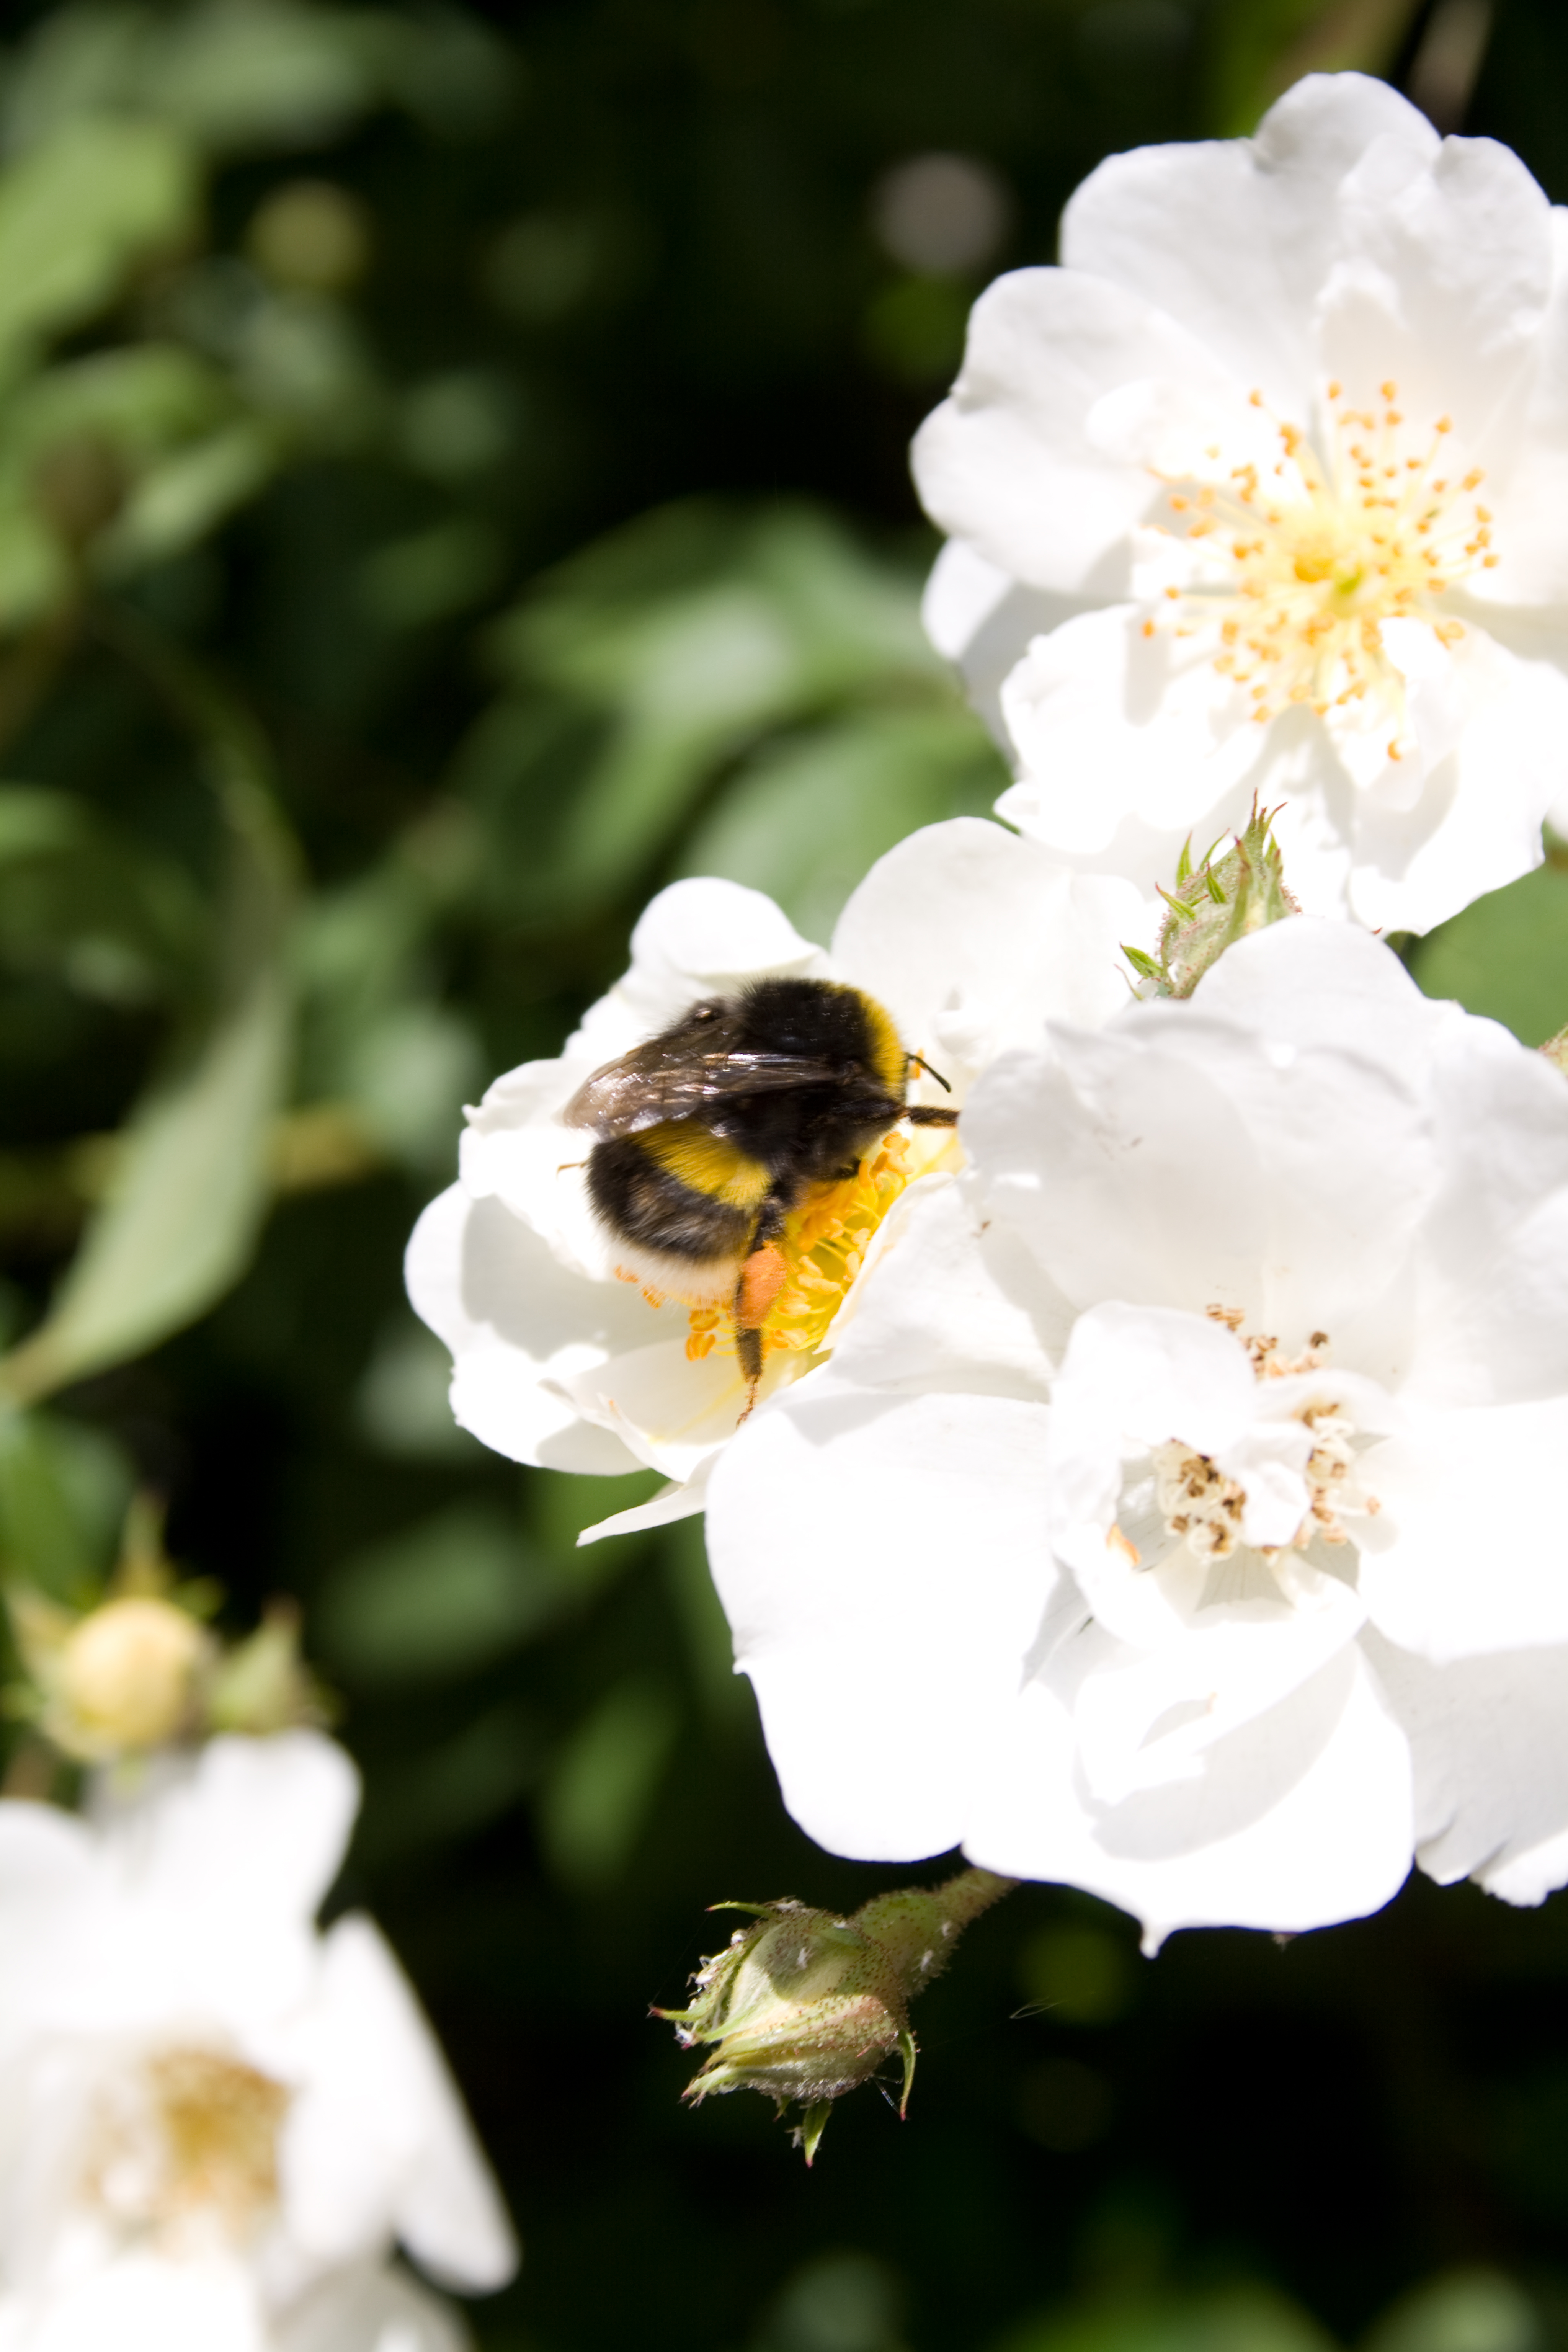 Bumble bee taking nectar photo